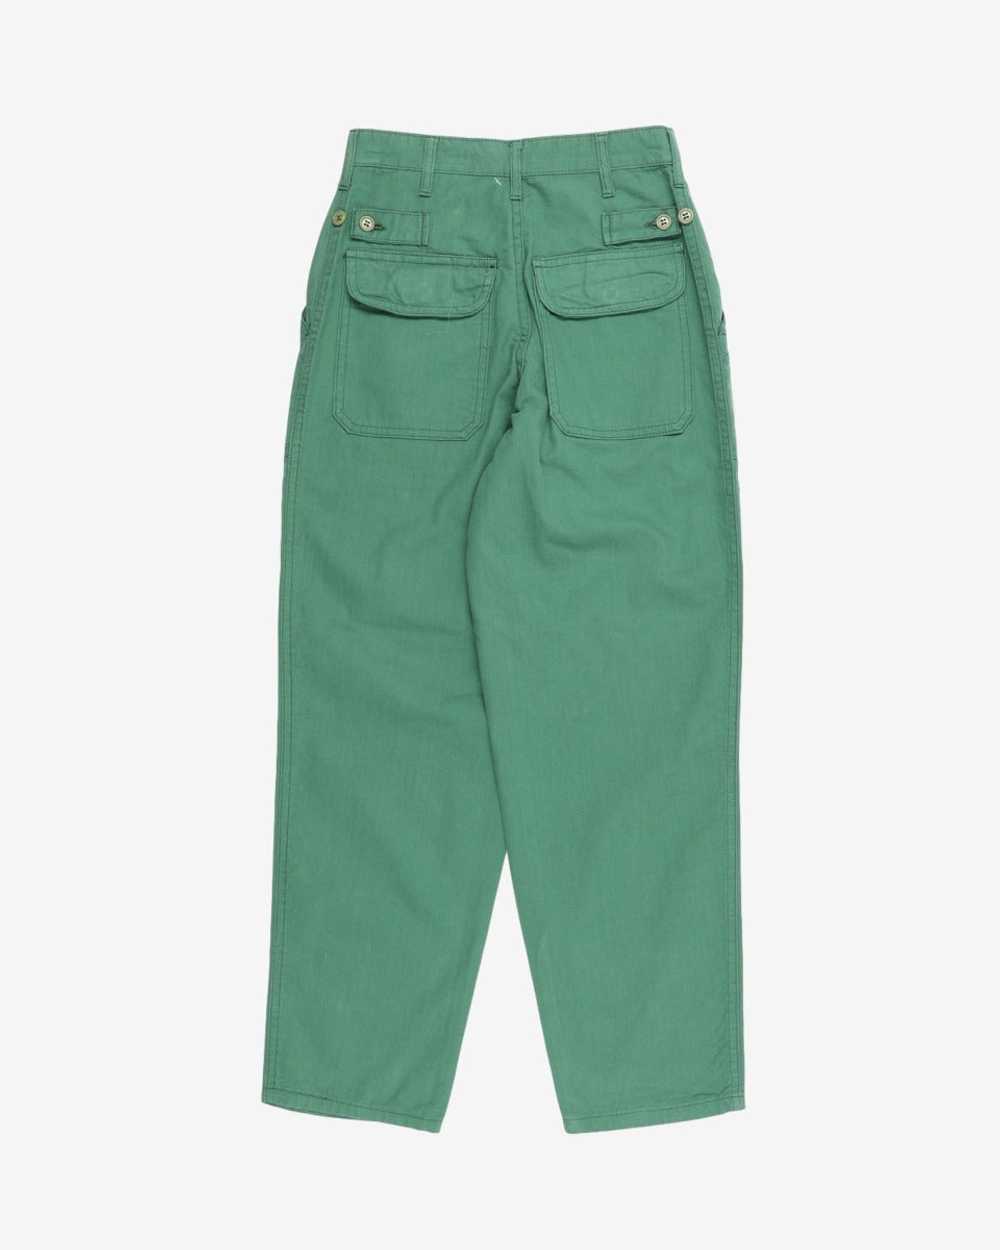 Benetton Deadstock 1980s cargo style trousers - image 2